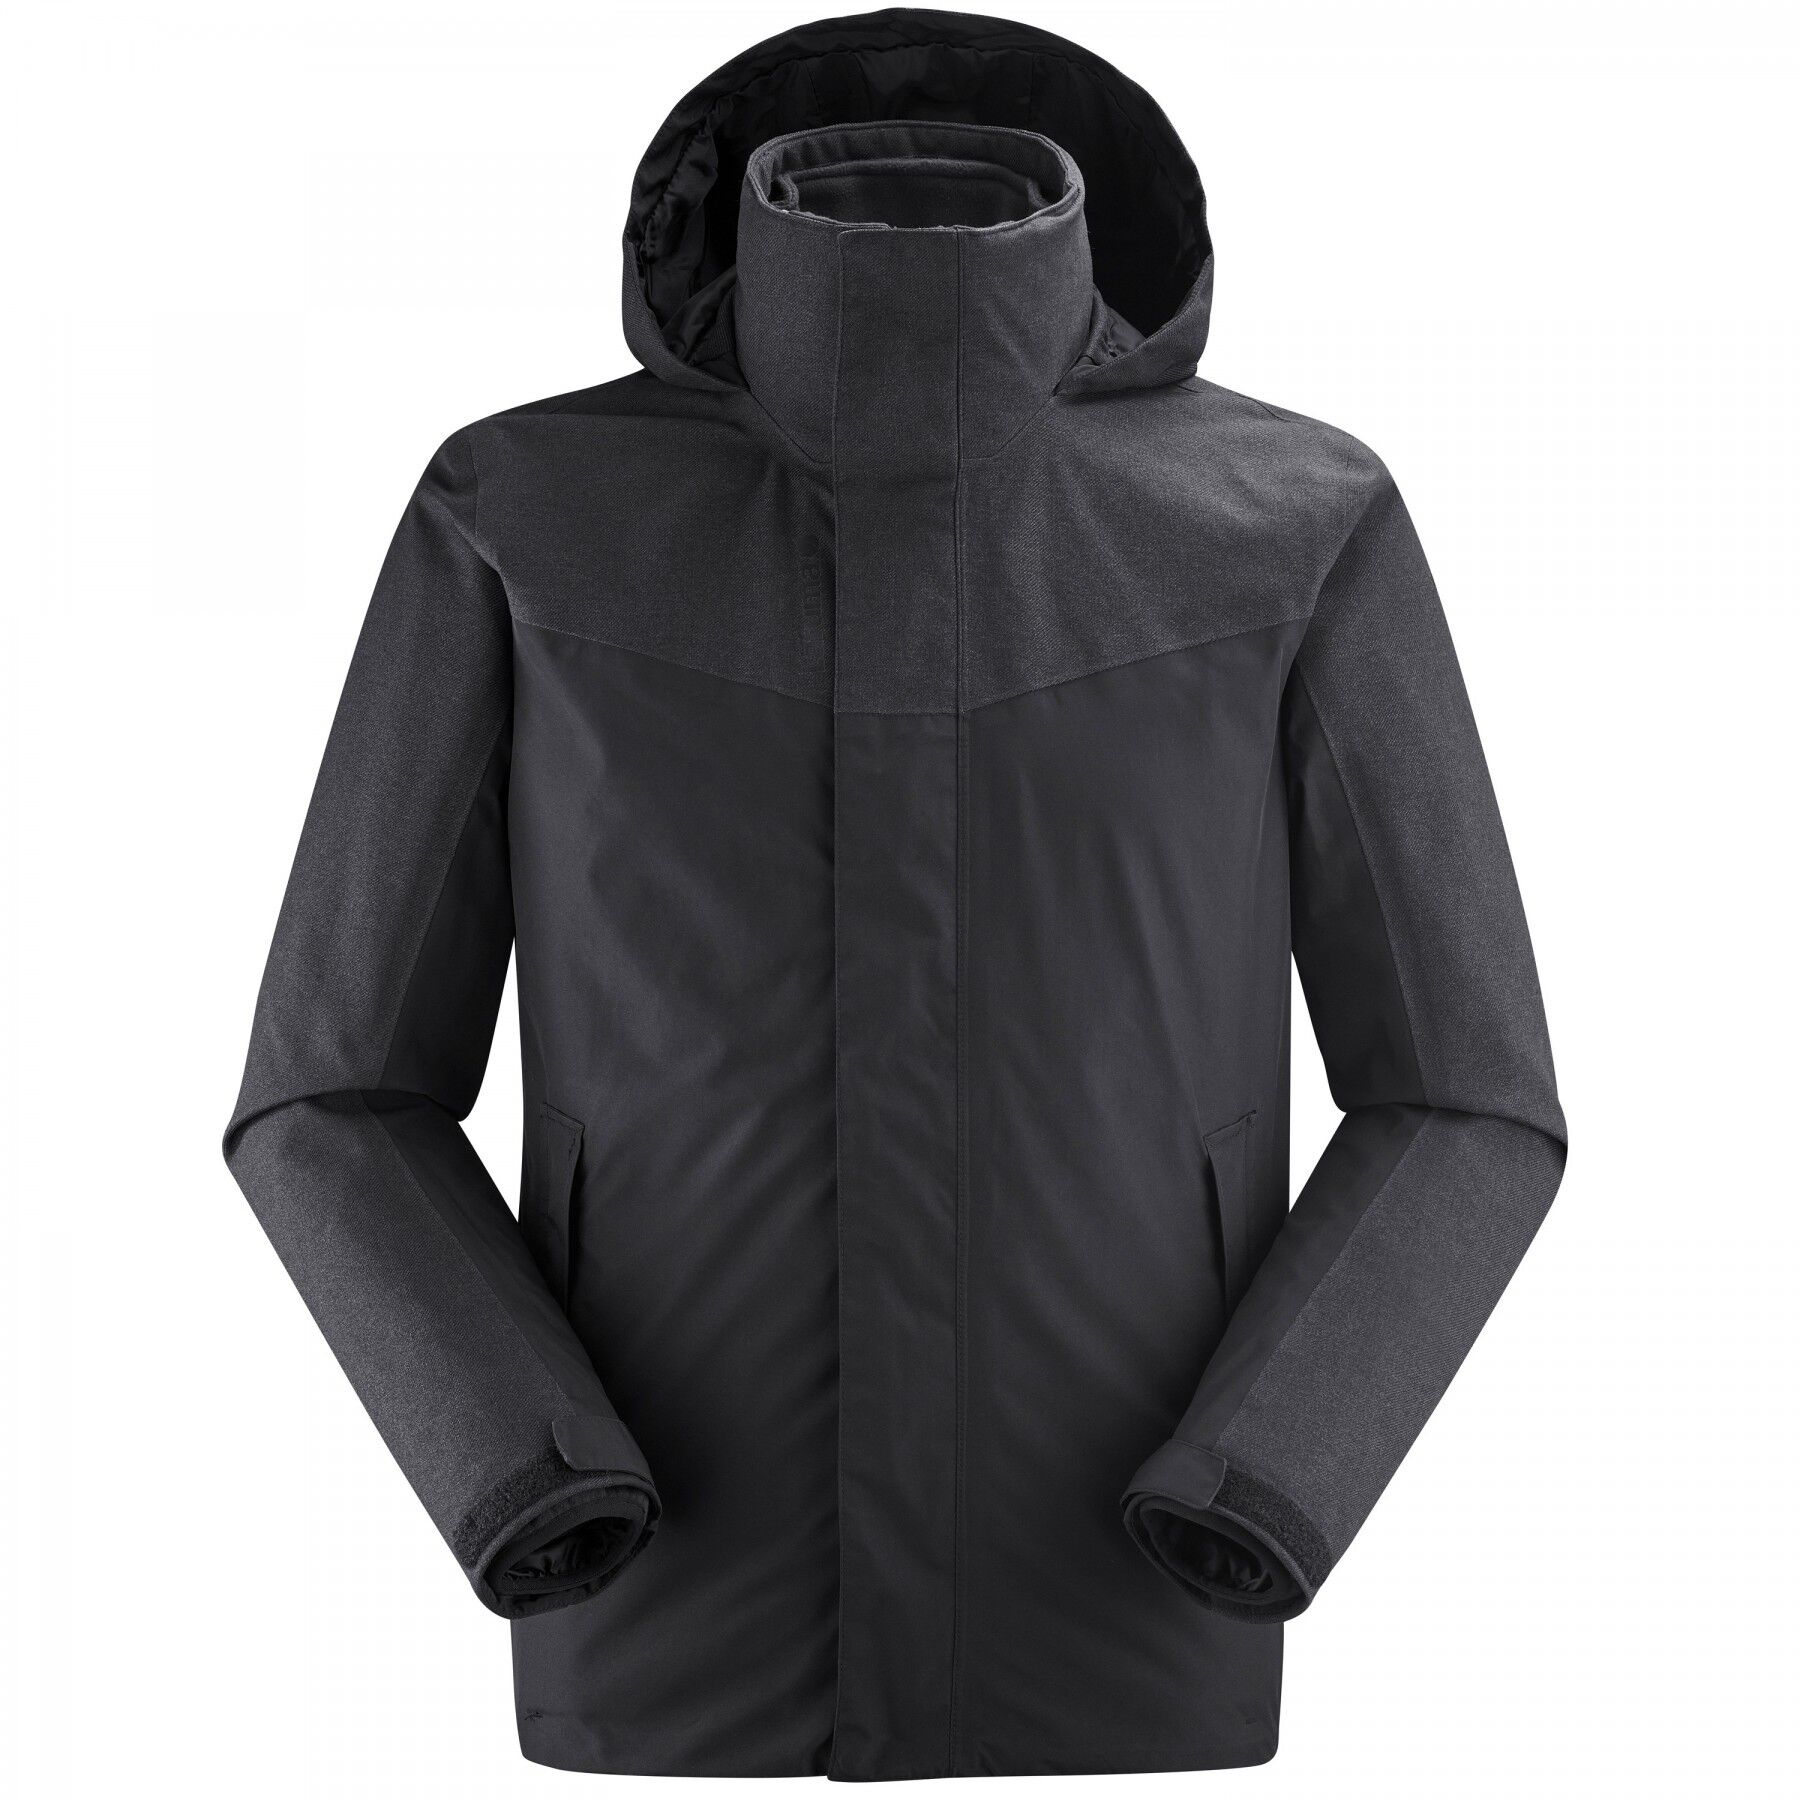 Lafuma Jaipur GTX 3In1 Fleece - 3-in-1 jacket - Men's